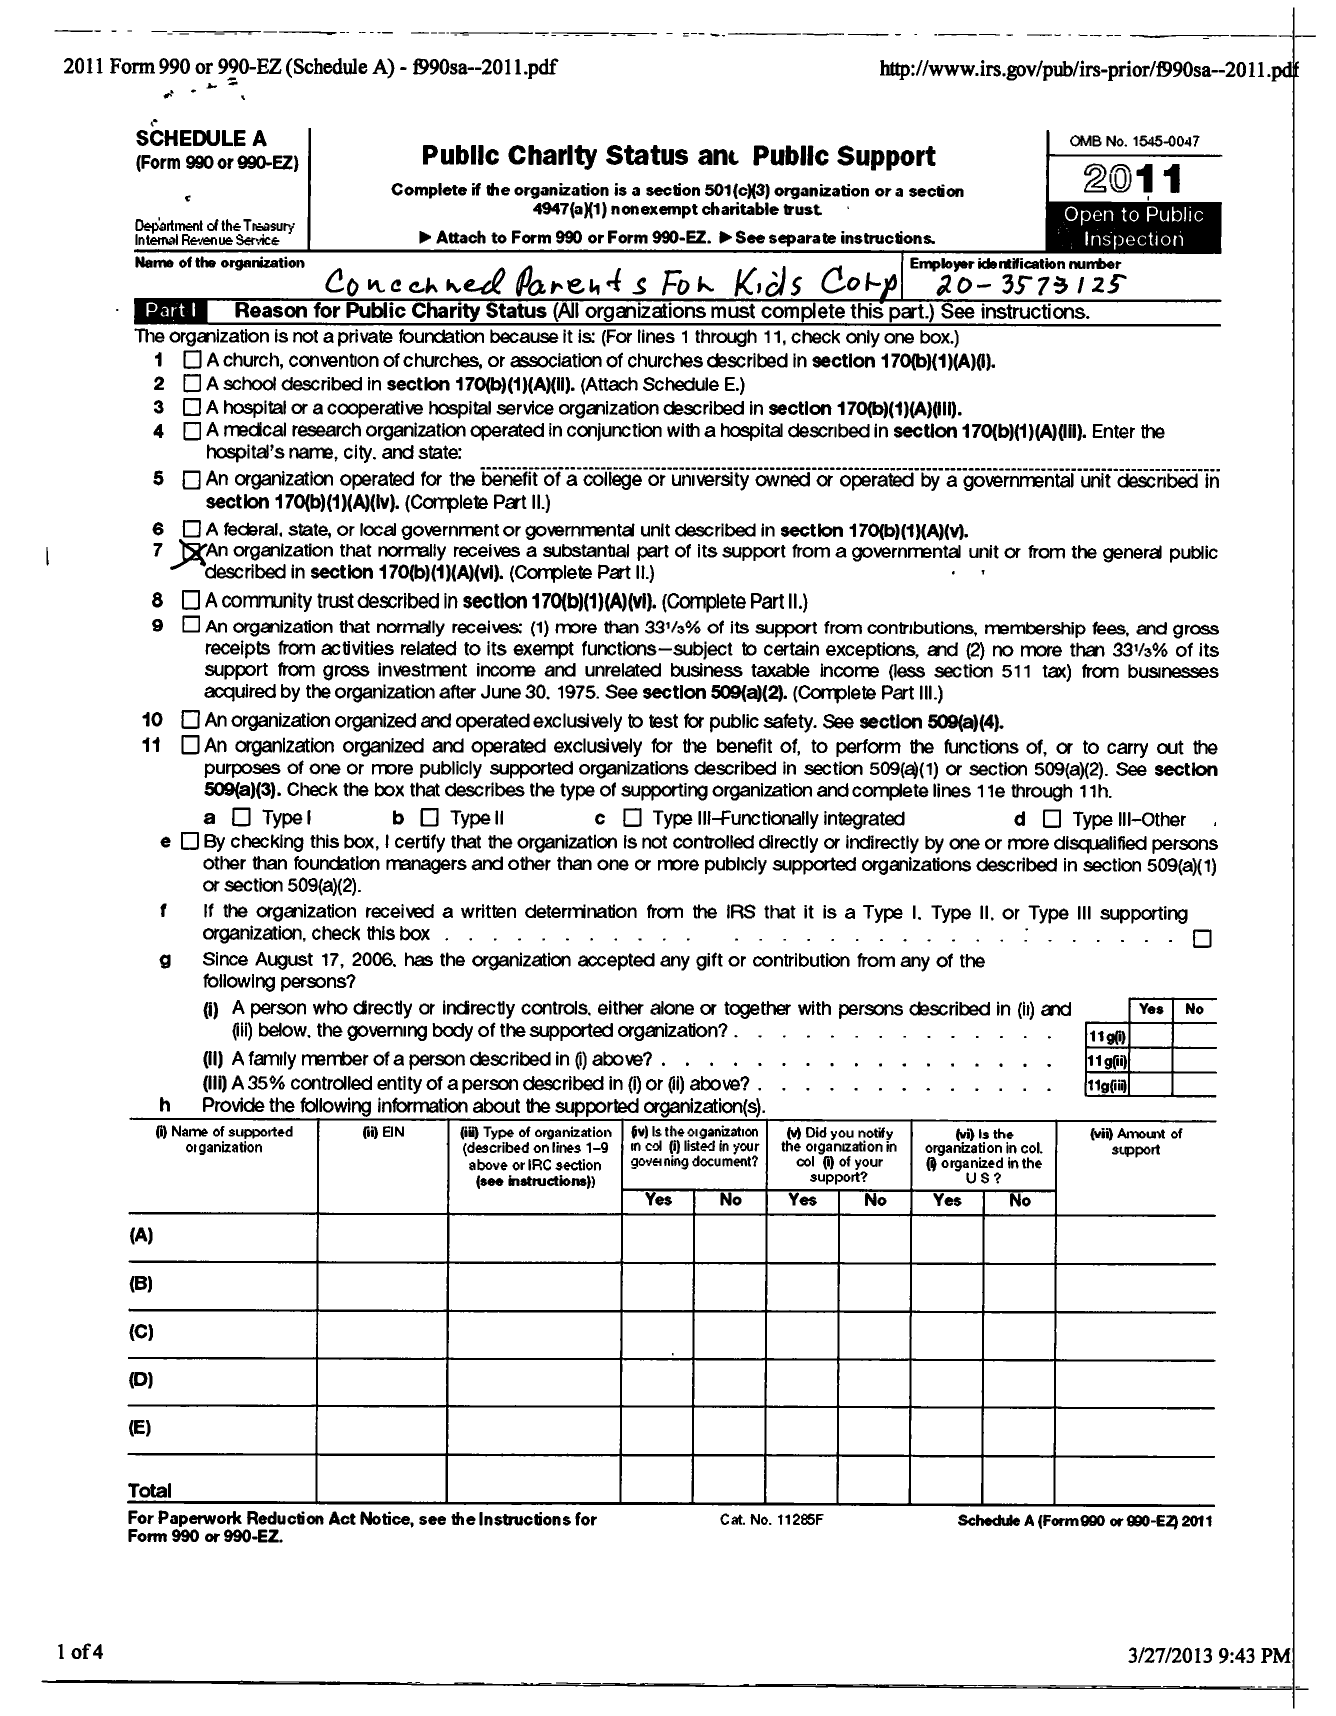 Image of first page of 2011 Form 990ER for Concerned Parents For Kids Corporation